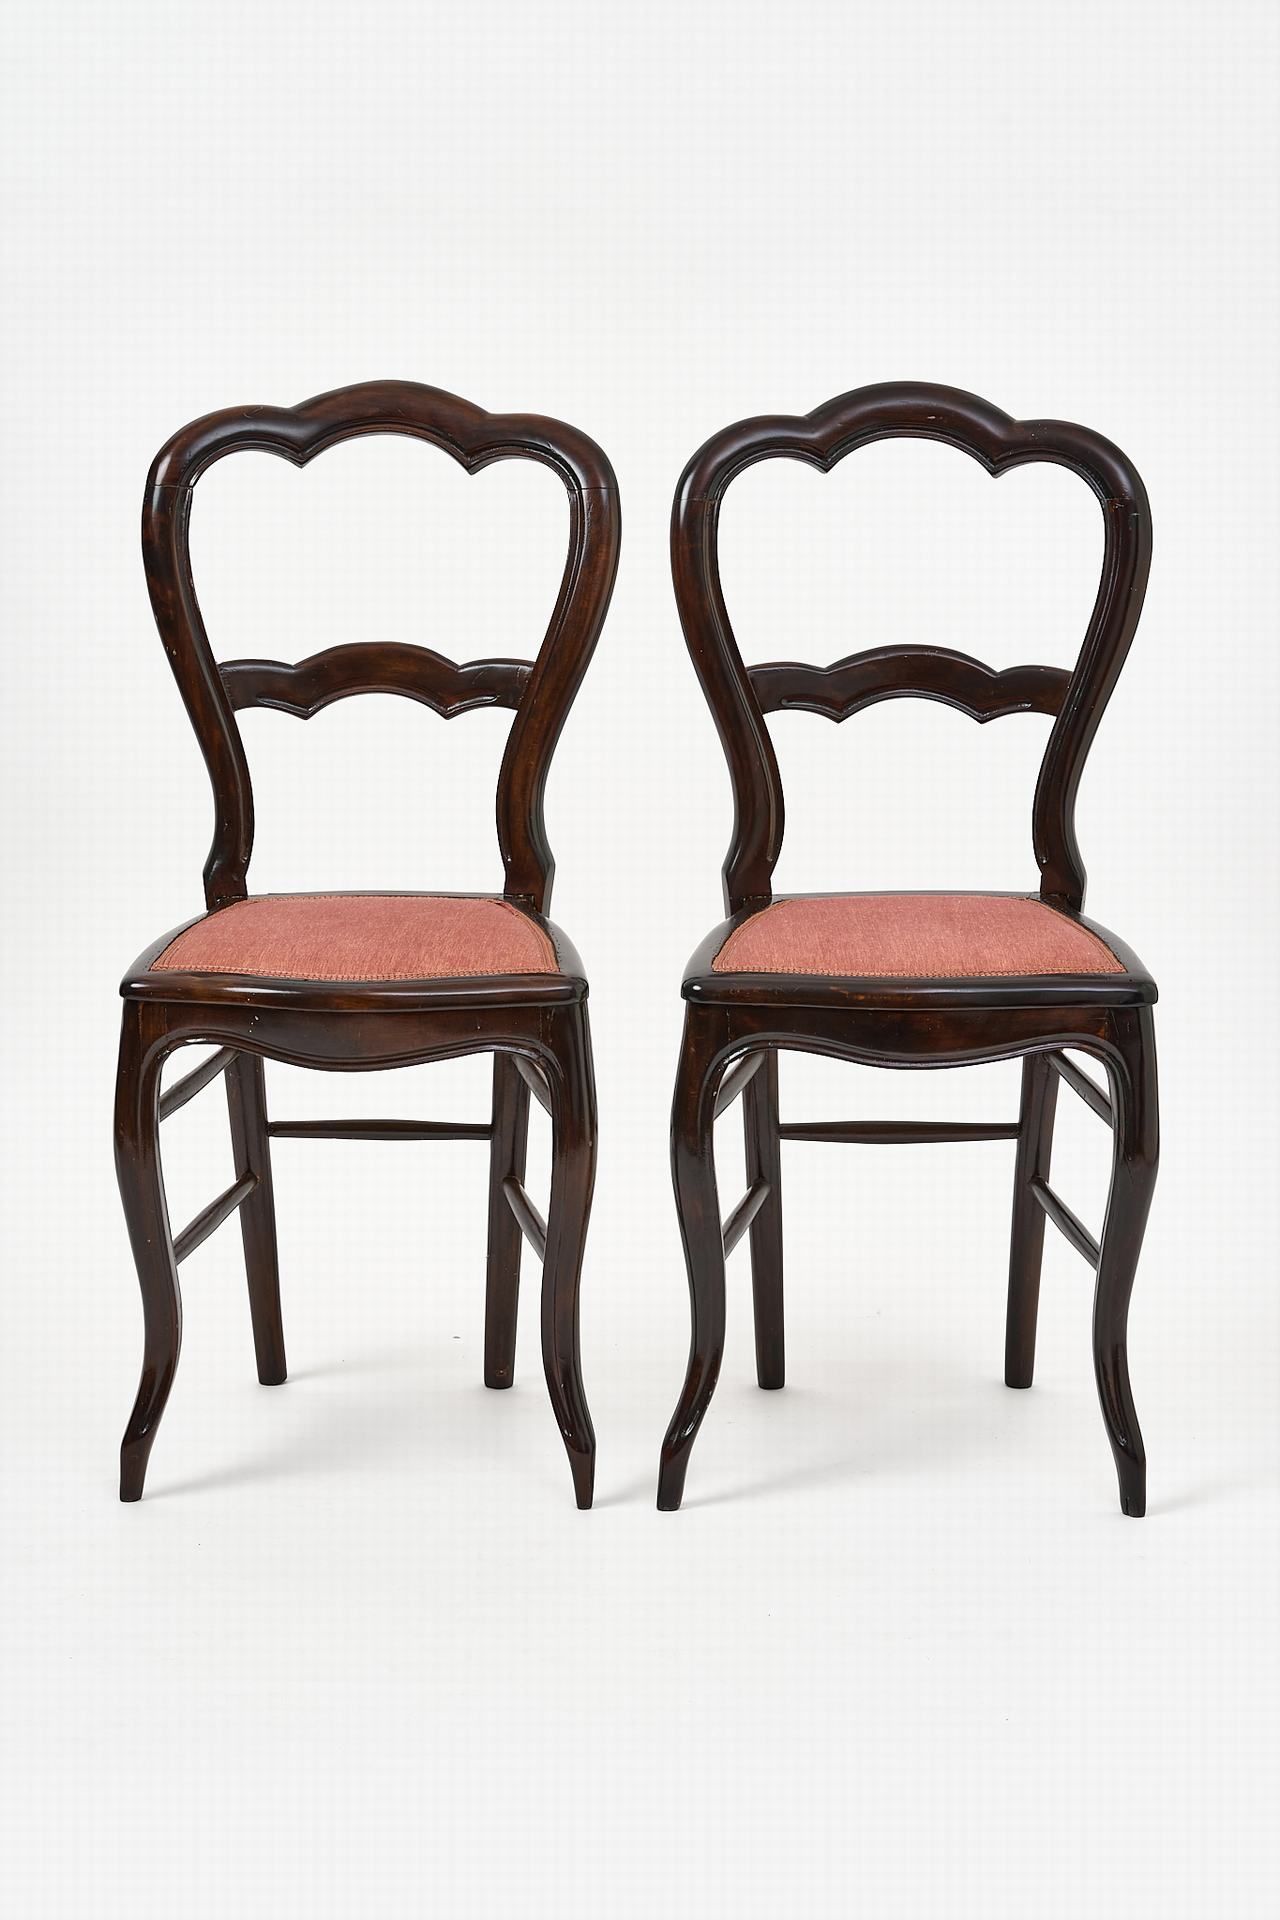 Paar Louis-Philippe-Stühle 桃花心木，弧形腿和靠背，软垫座椅。高 91 厘米，座高 46 厘米。宽 40 厘米。状况良好。